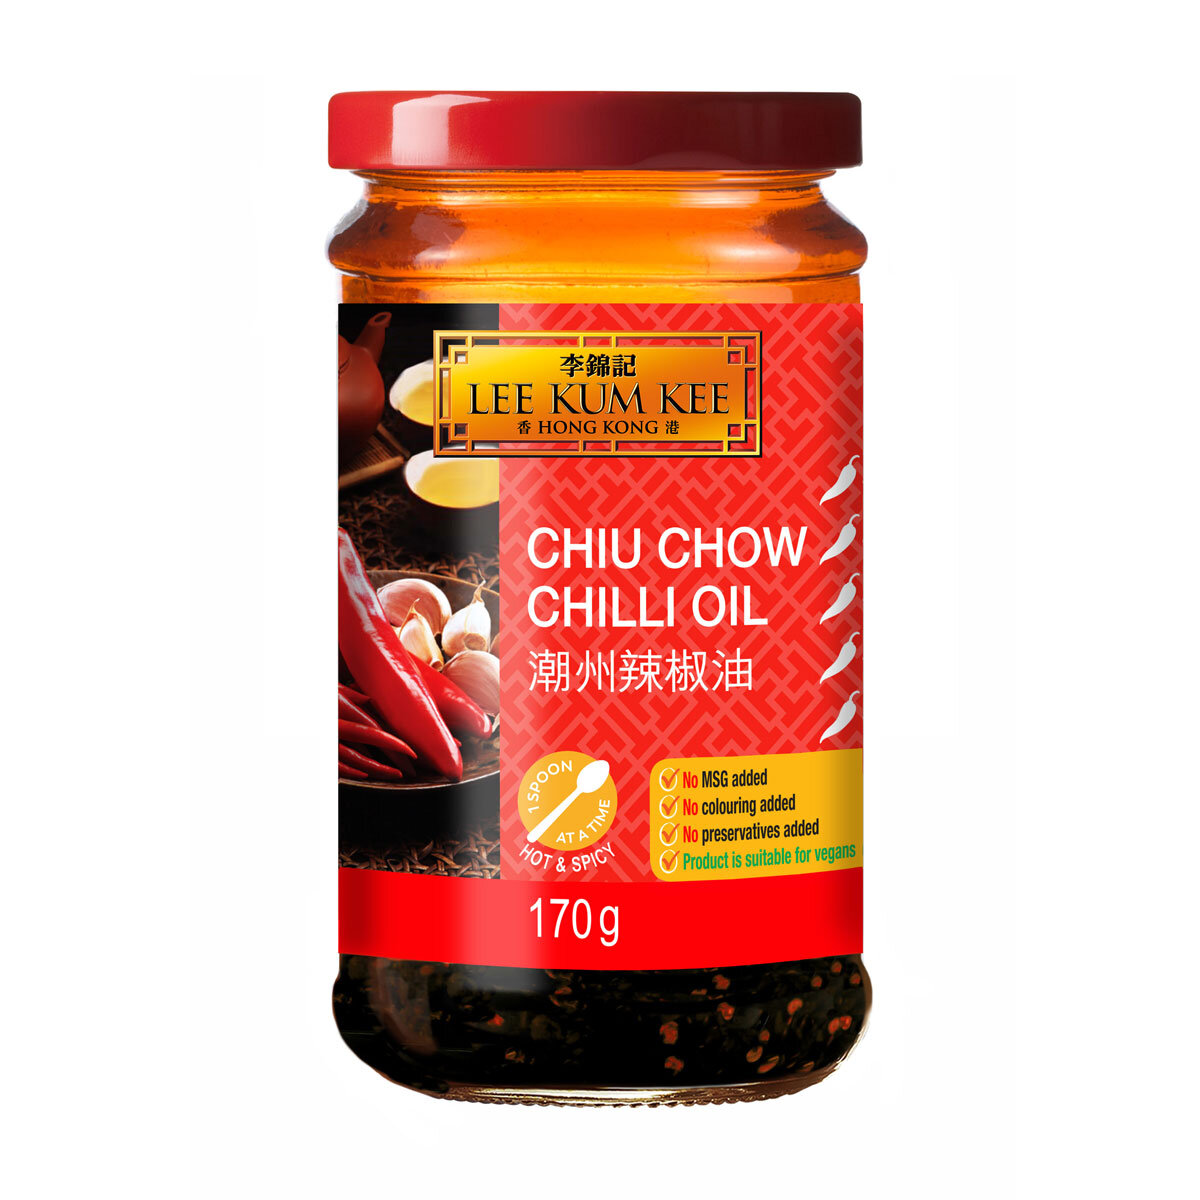 Chiu Chow Chilli Oil, 170g